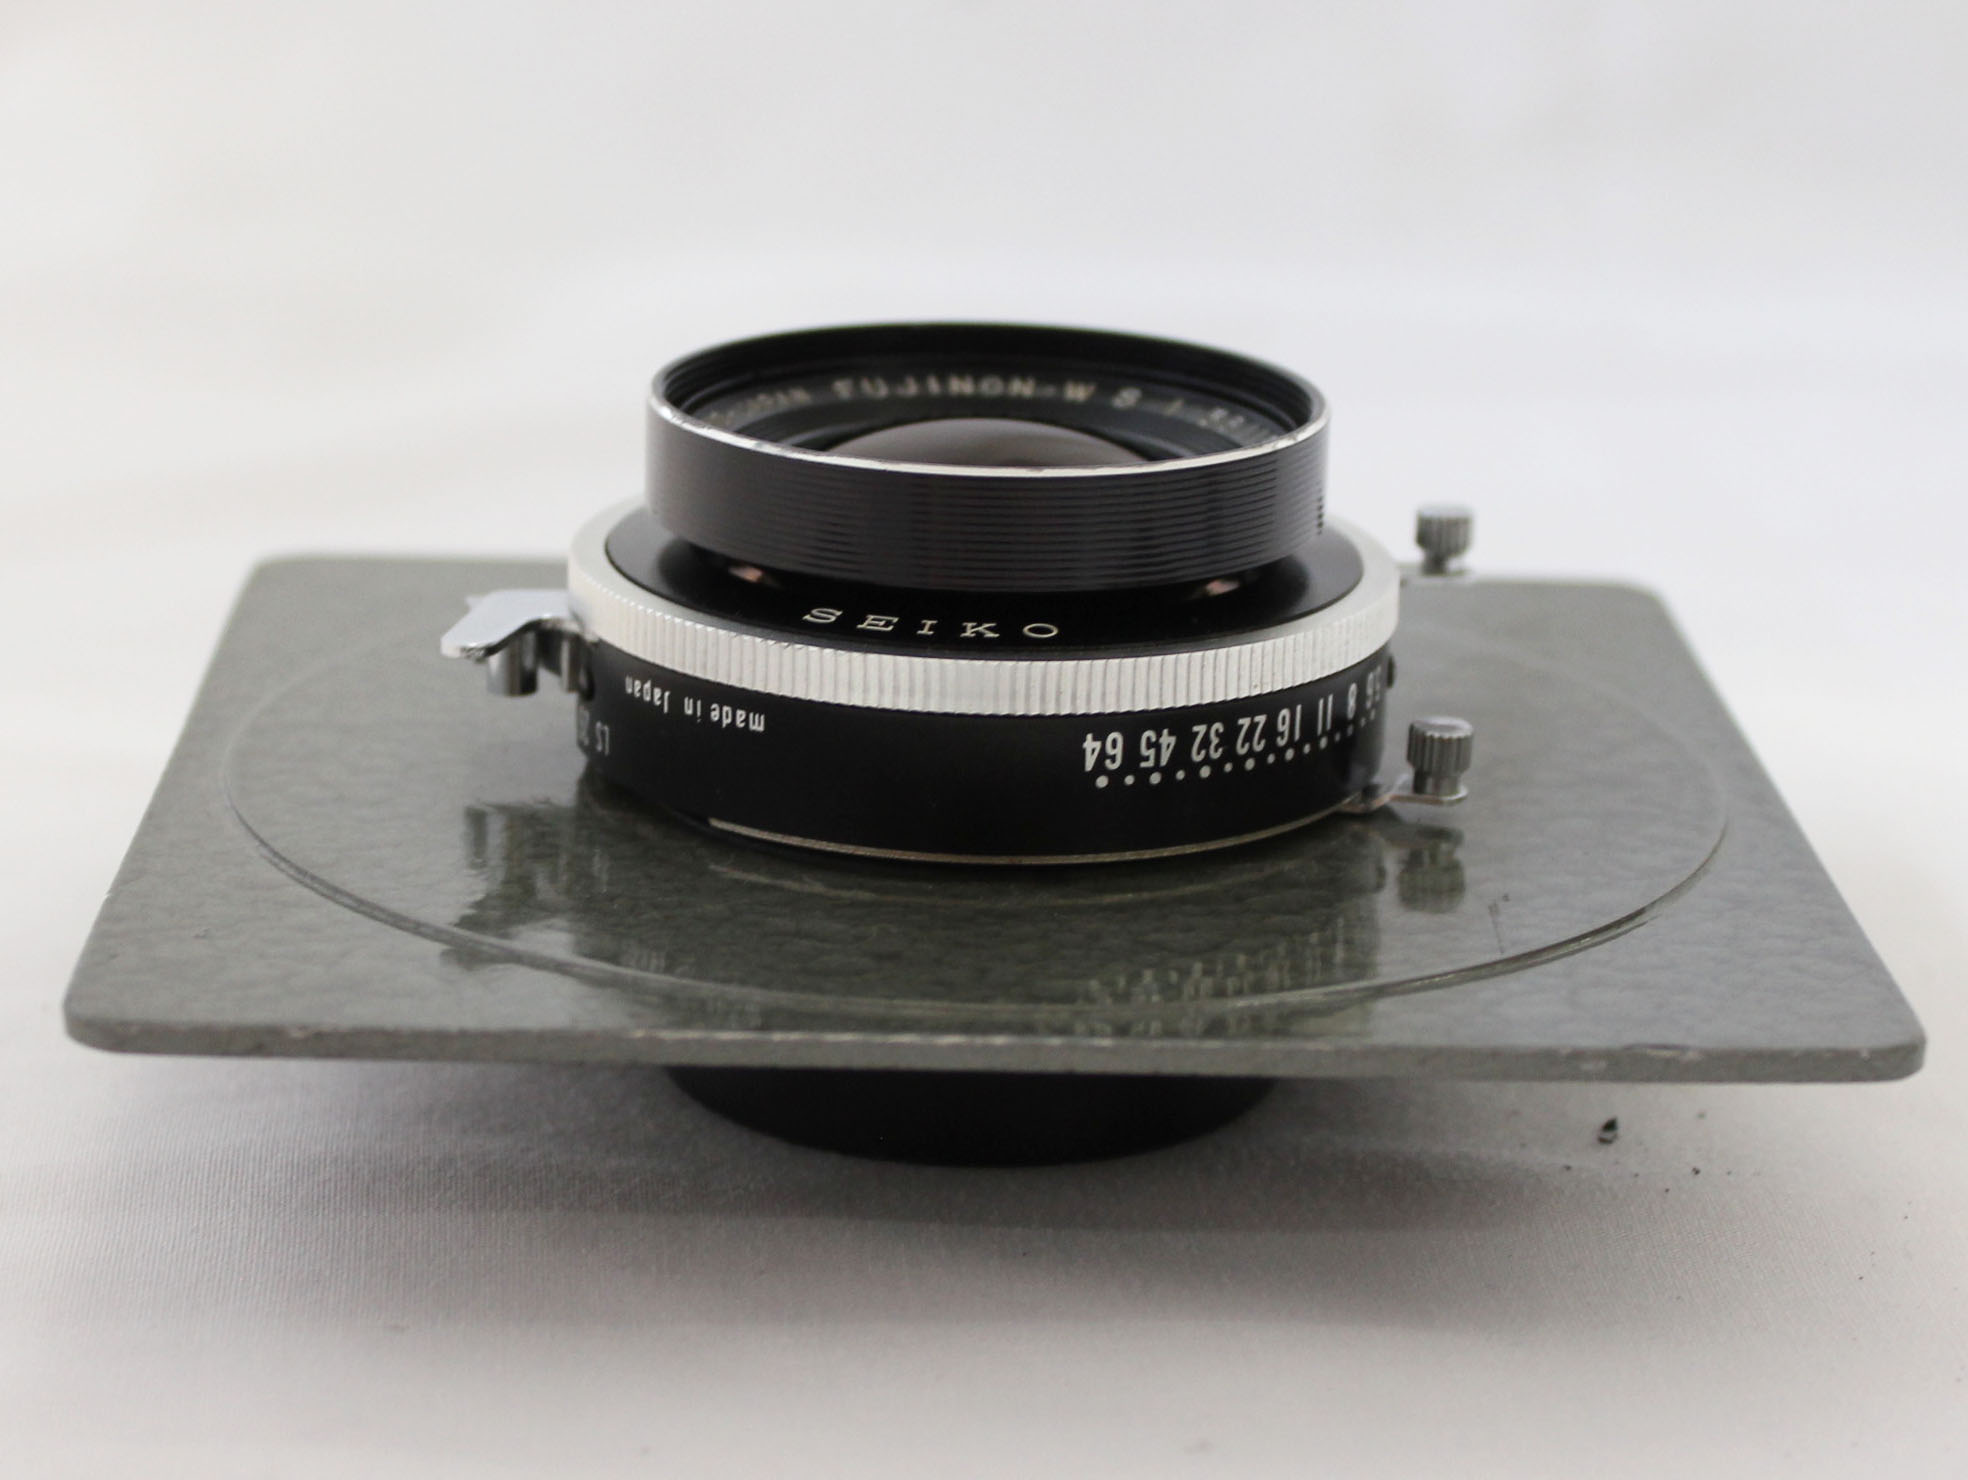 Fuji Fujinon W S 150mm F/5.6 Large Format Lens Seiko Shutter from Japan Photo 4